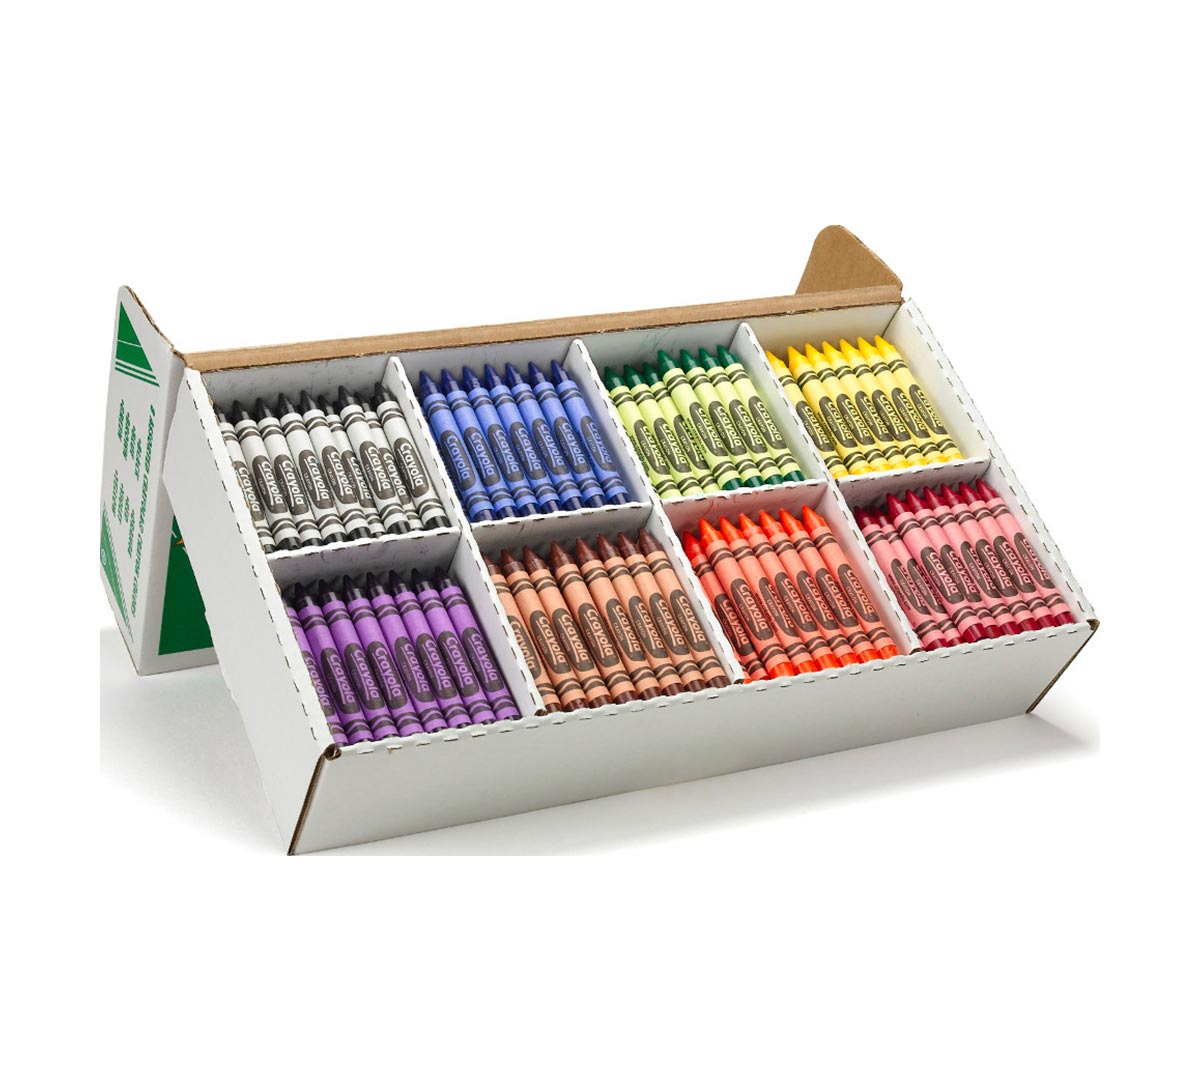 Crayola - Classpack Crayons w/Markers 8 Colors